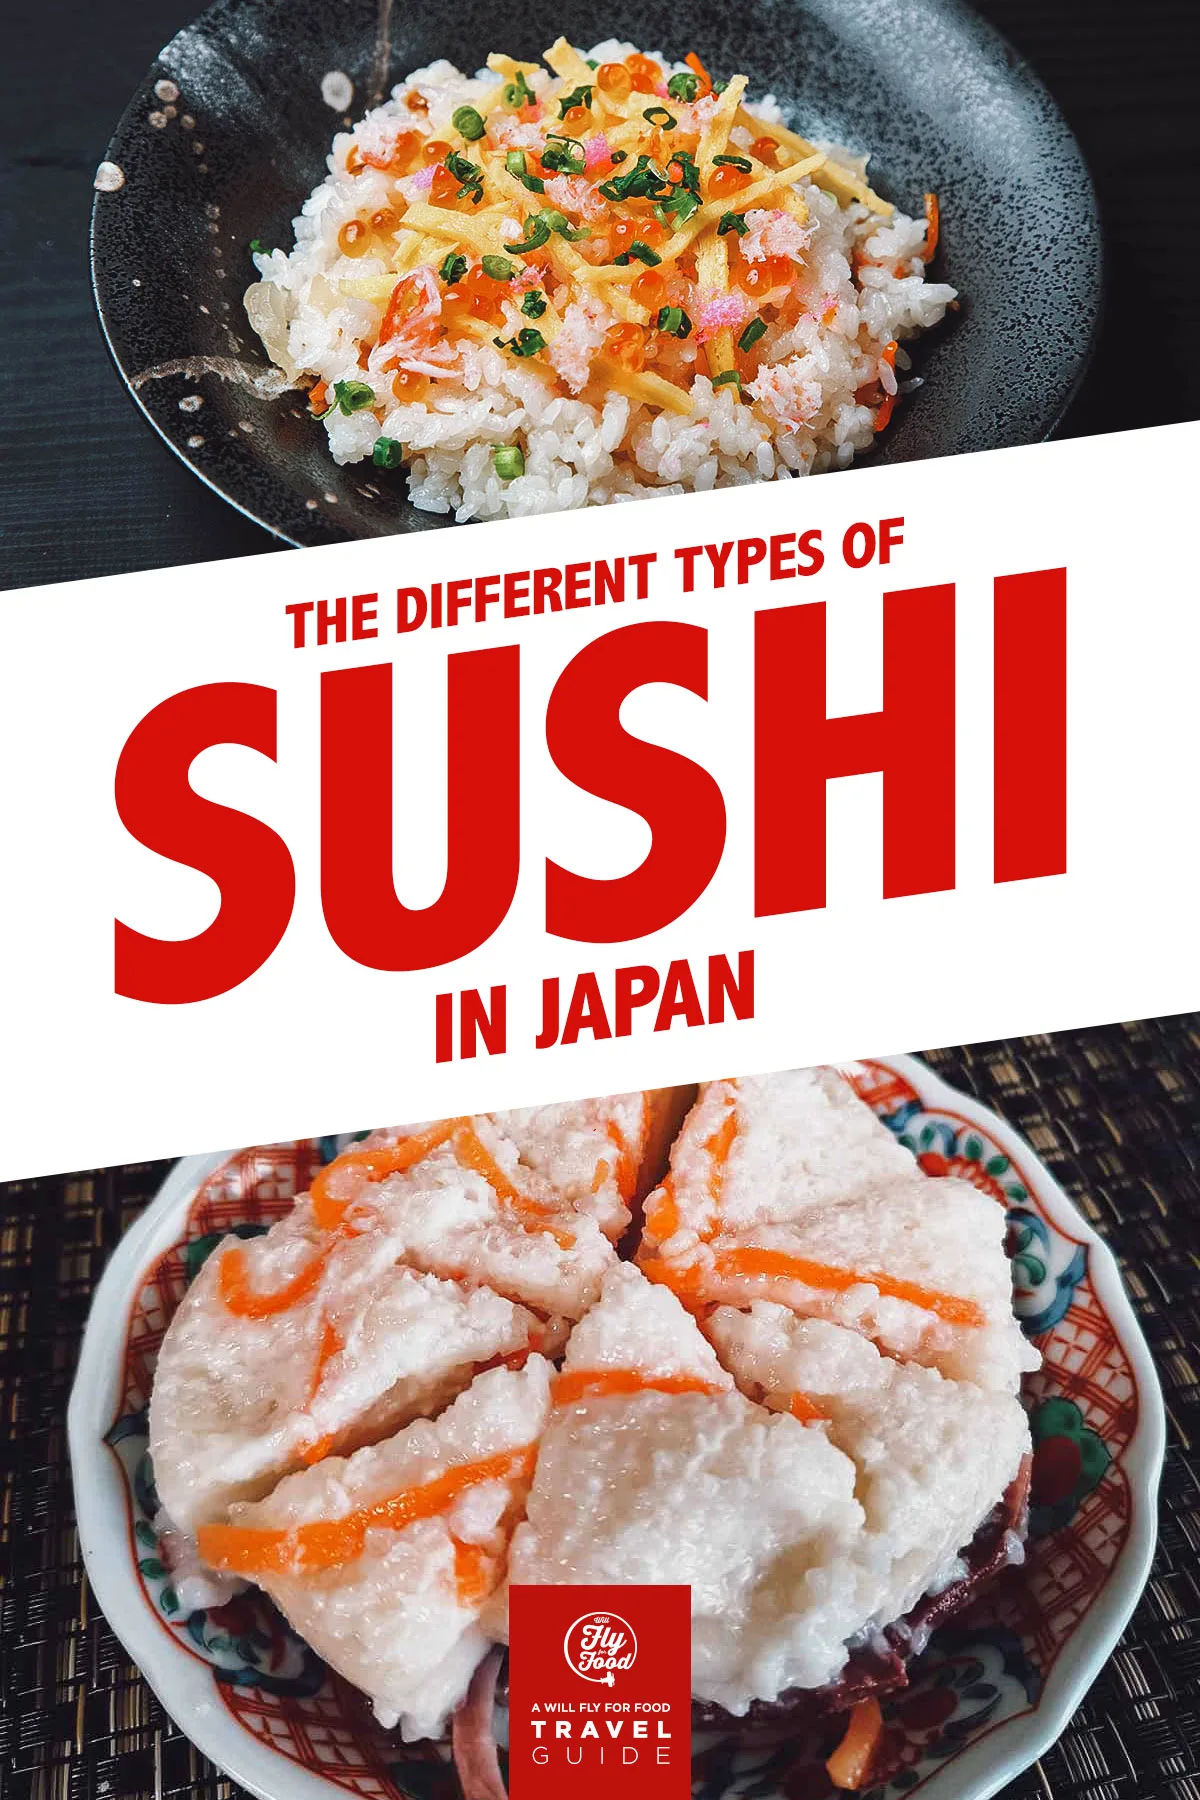 Chirashi and kaburazushi, two of the more interesting types of sushi in Japan